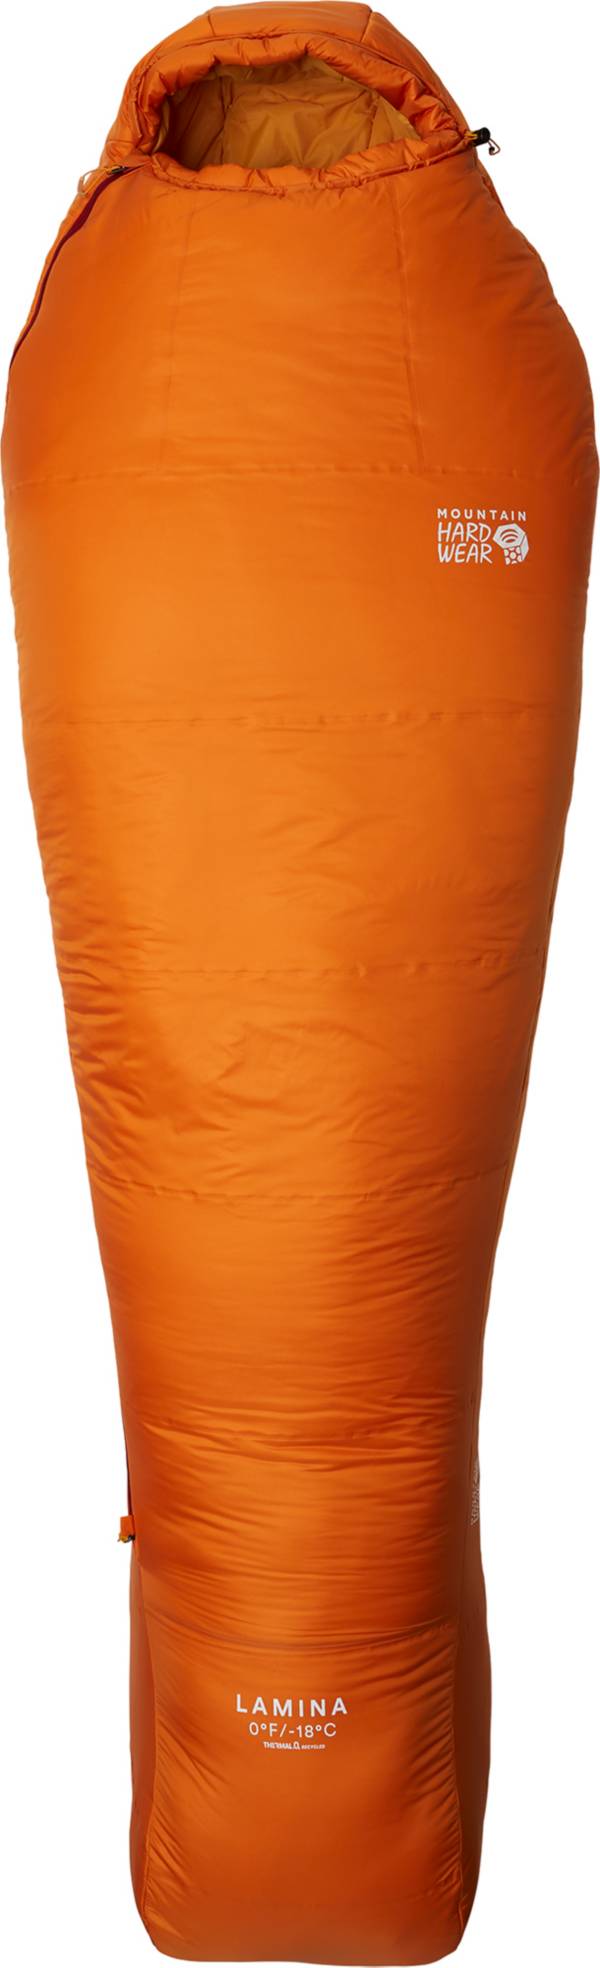 Mountain Hardwear Lamia 0°F Sleeping Bag product image